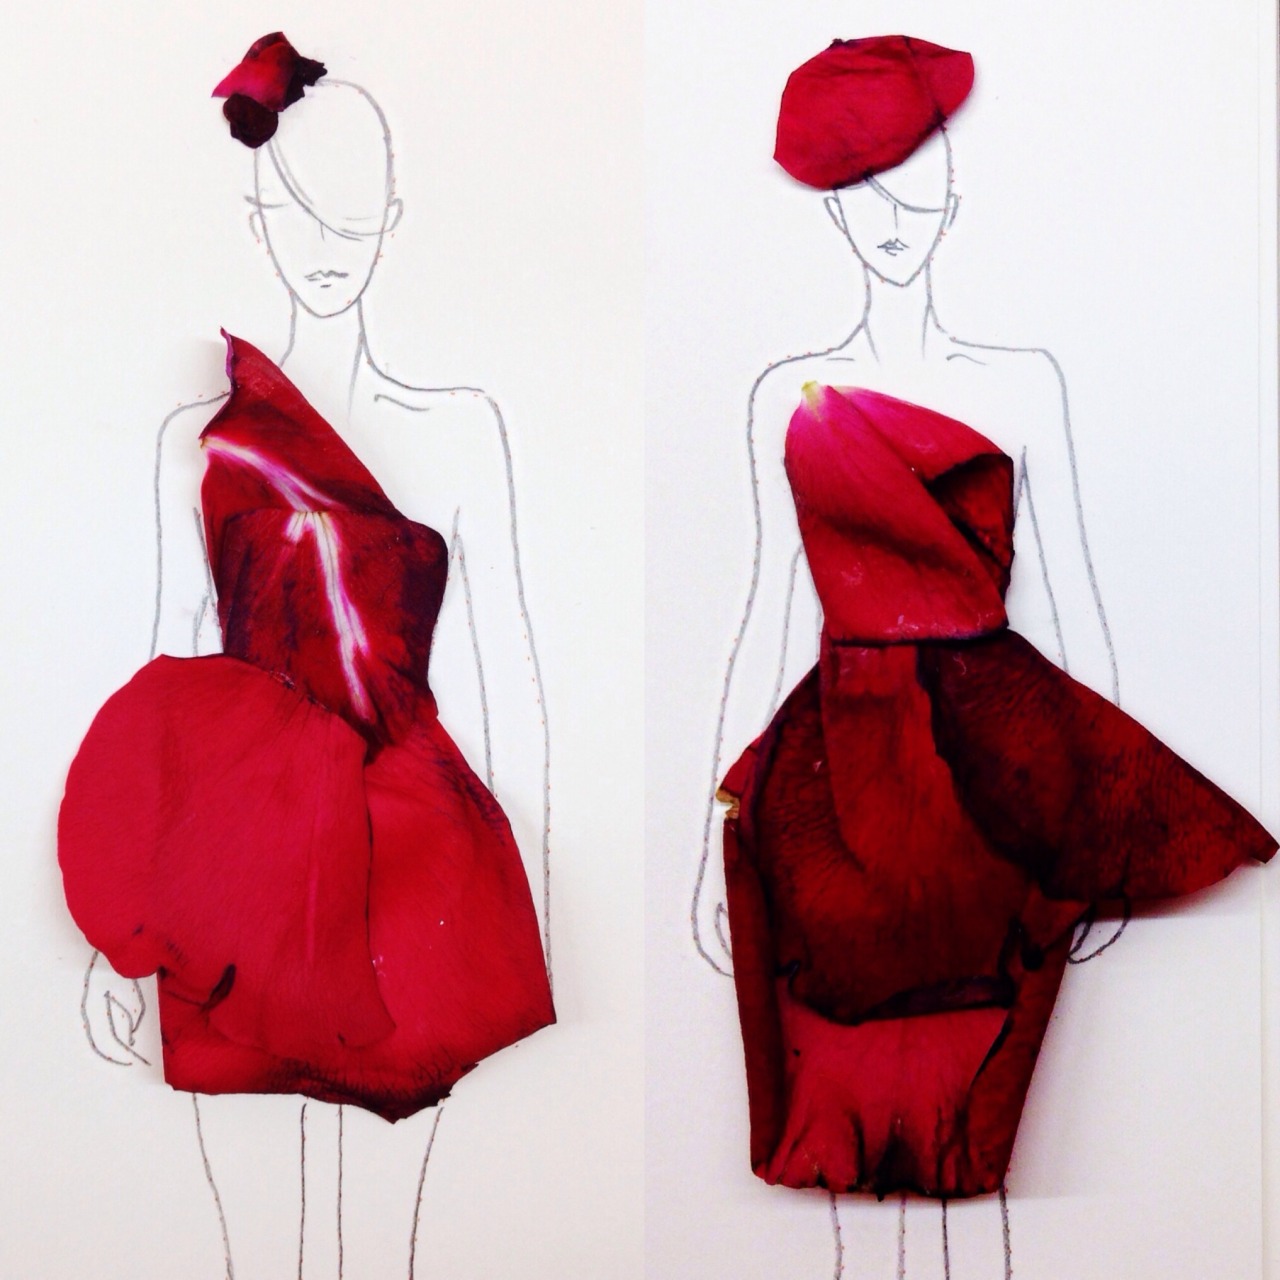 fashionaryhand:  Creative Fashionary sketches by Grace Ciao Grace is a fashion illustrator